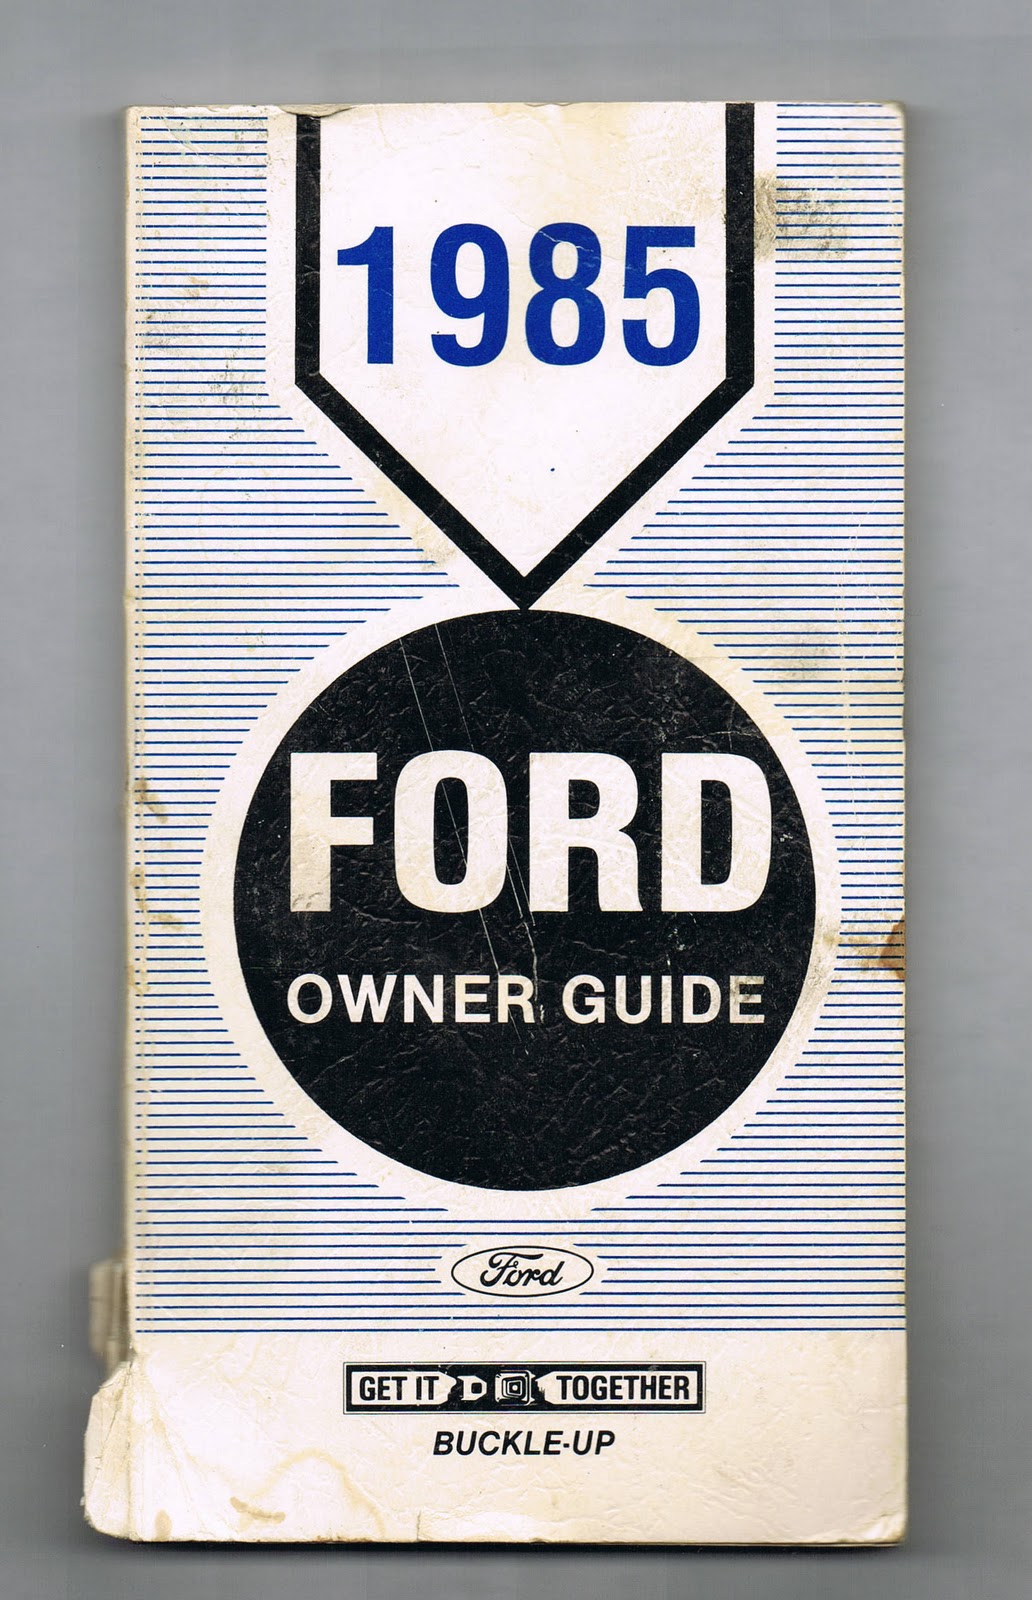 KC Music Shop: 1985 Ford Owner Guide book - eBay (item 380296018360 end